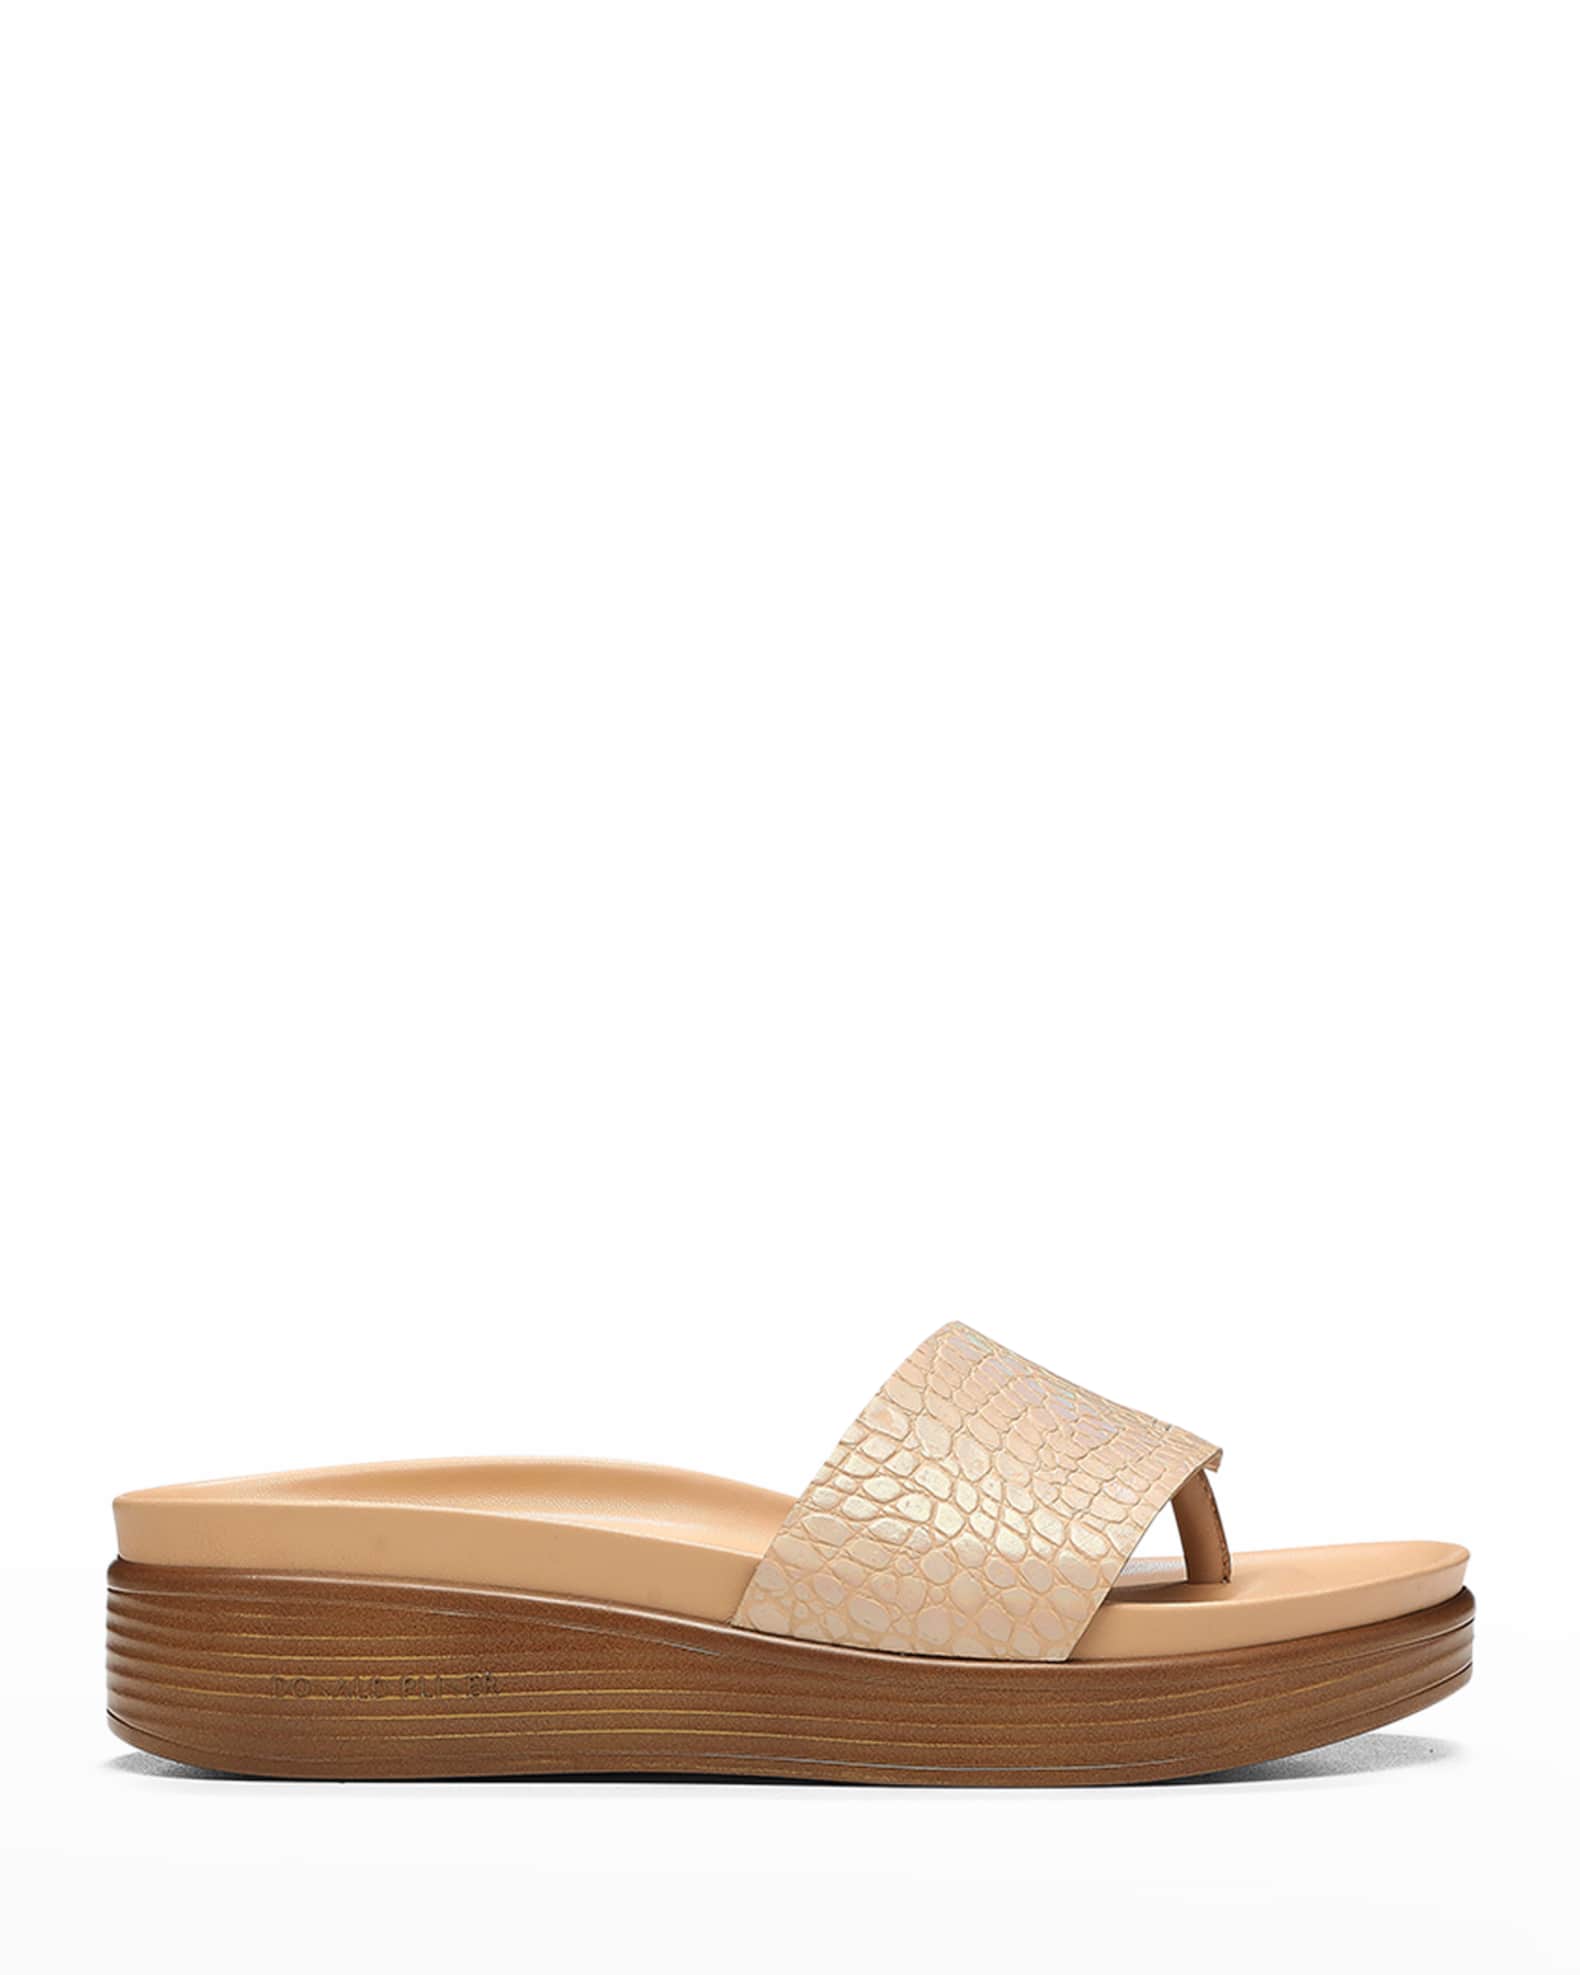 Donald J Pliner Fifi Croco Wedge Thong Sandals | Neiman Marcus